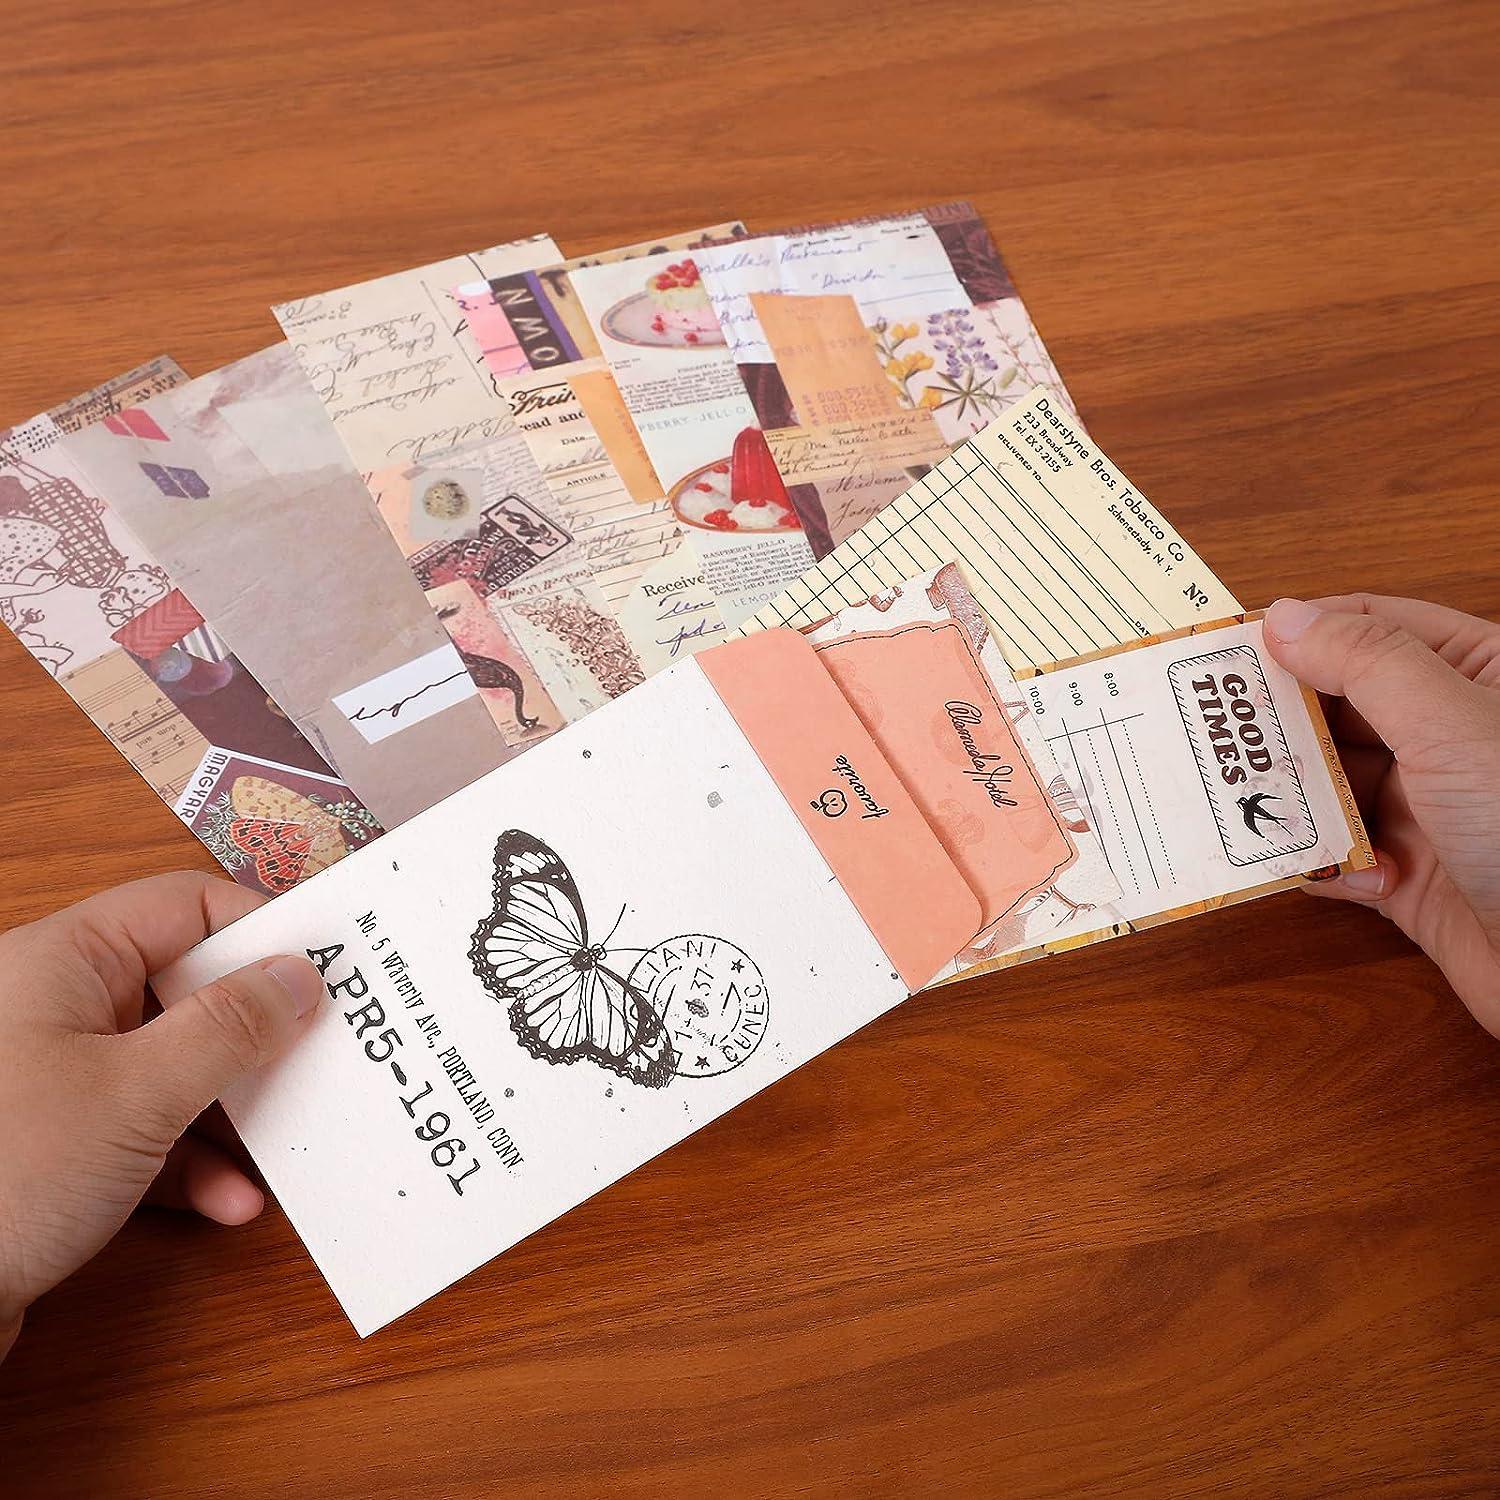 348pcs Scrapbook Kit, Scrapbooking Supplies kit with Aesthetic Scrapbook  Paper, Washi Stickers, Washi Tape, A6 Notebook Art Journaling Kit for  Bullet